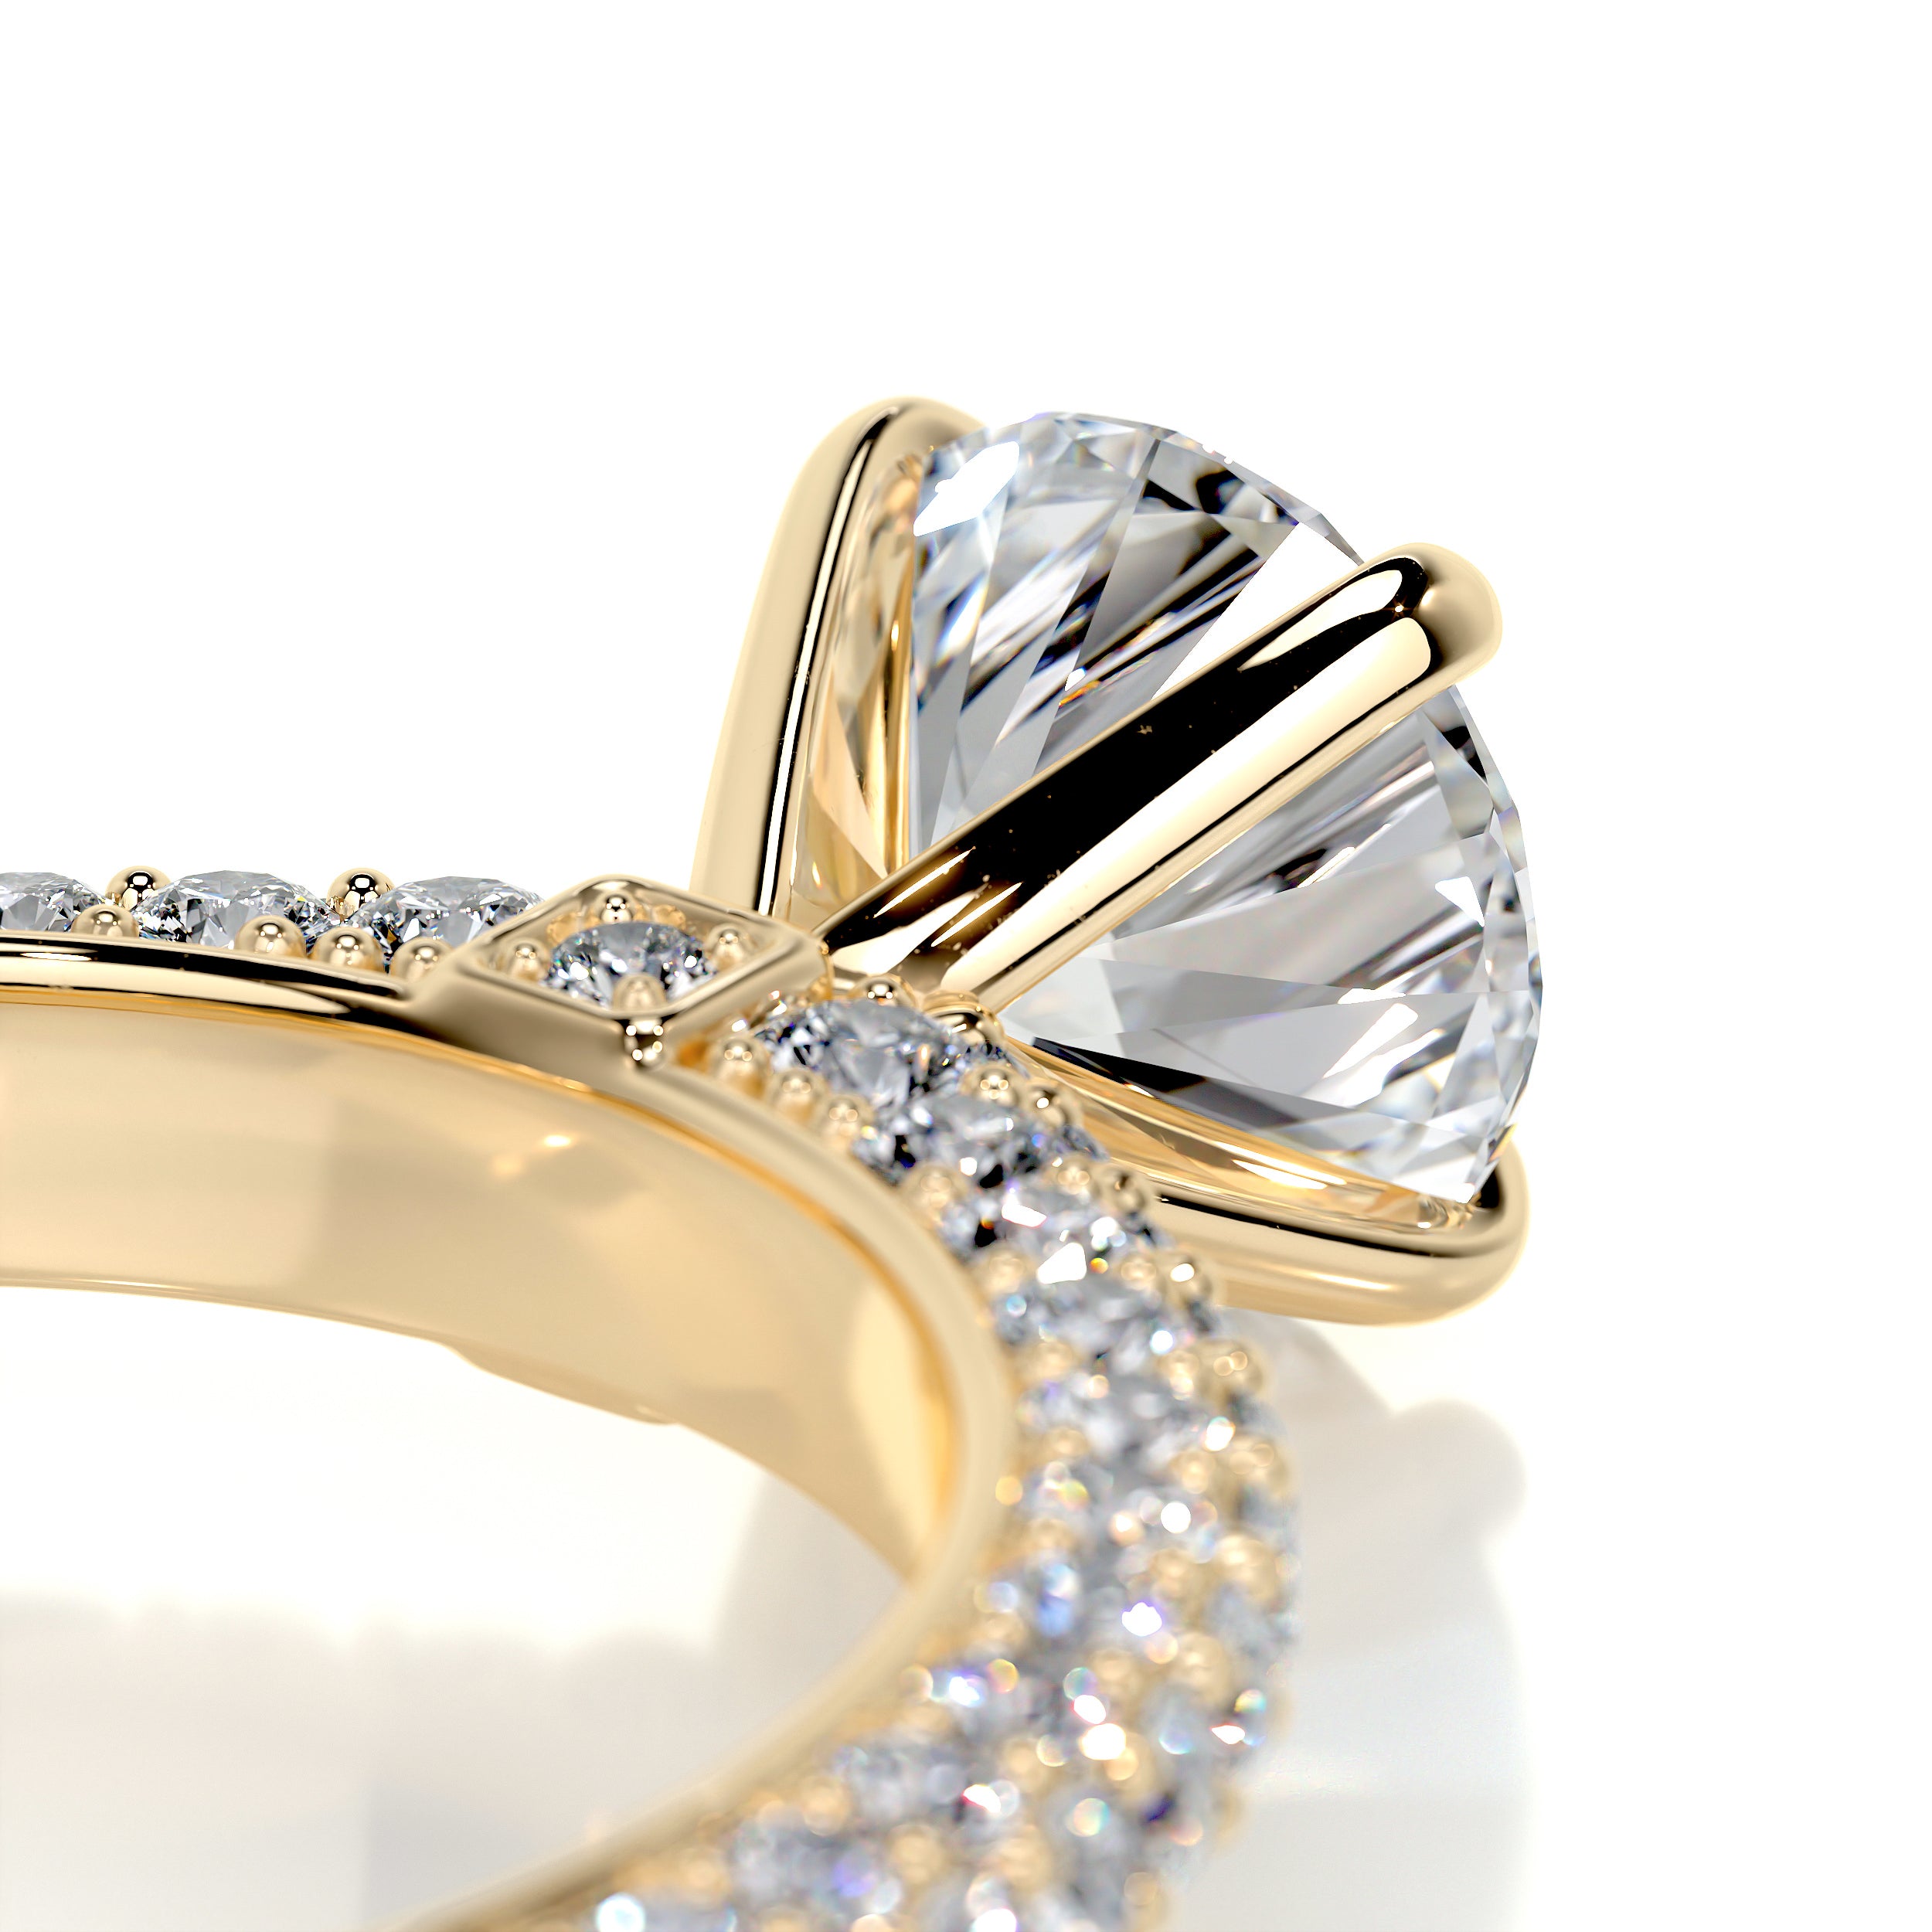 Lillian Diamond Engagement Ring   (1.5 Carat) -18K Yellow Gold